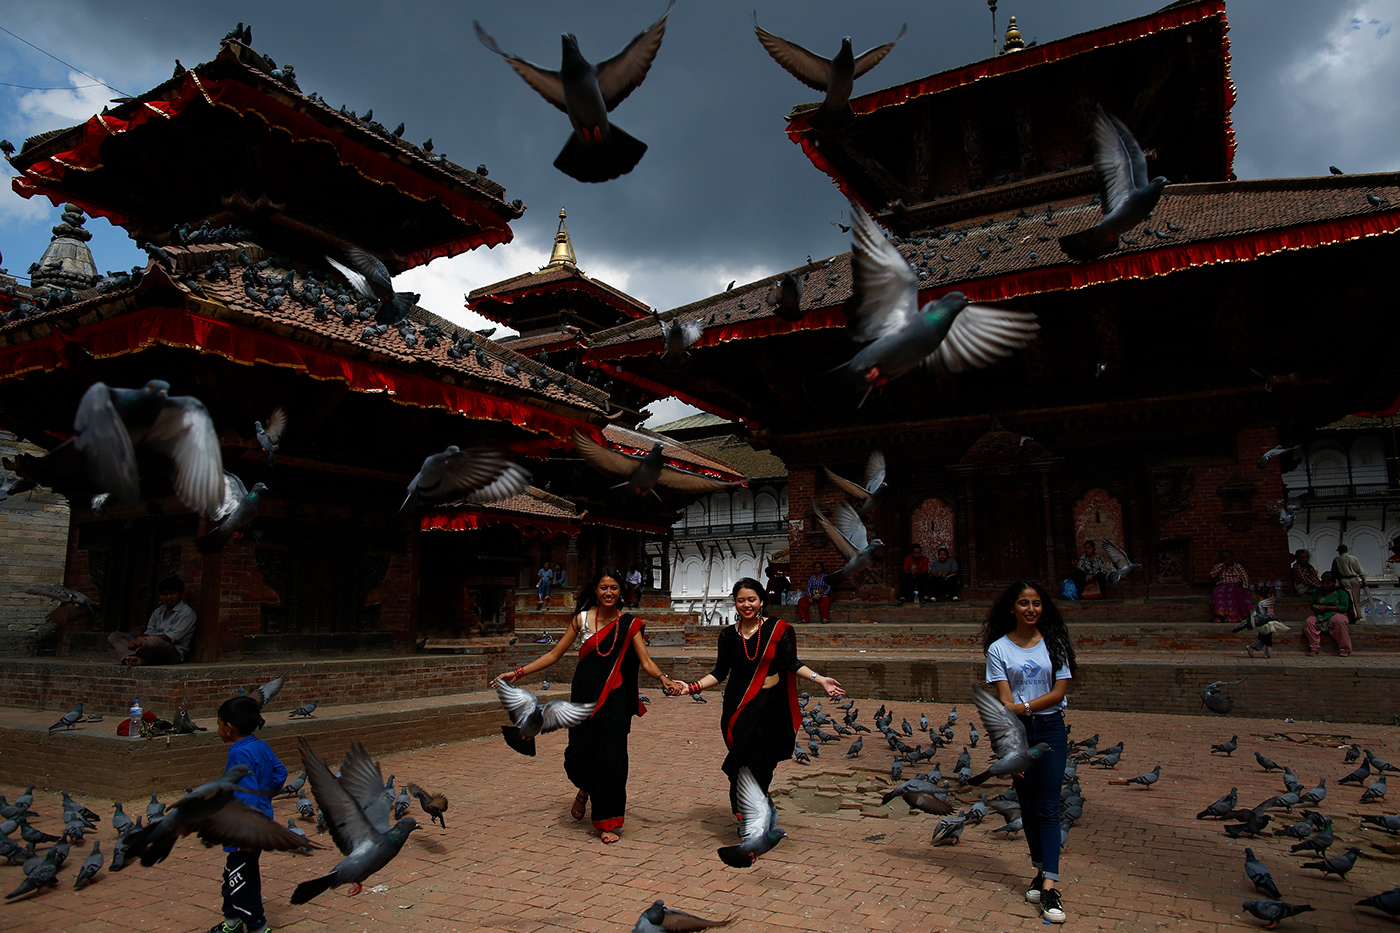 nepal kathmandu asia news culture festival dailylife Events photojournalism  people